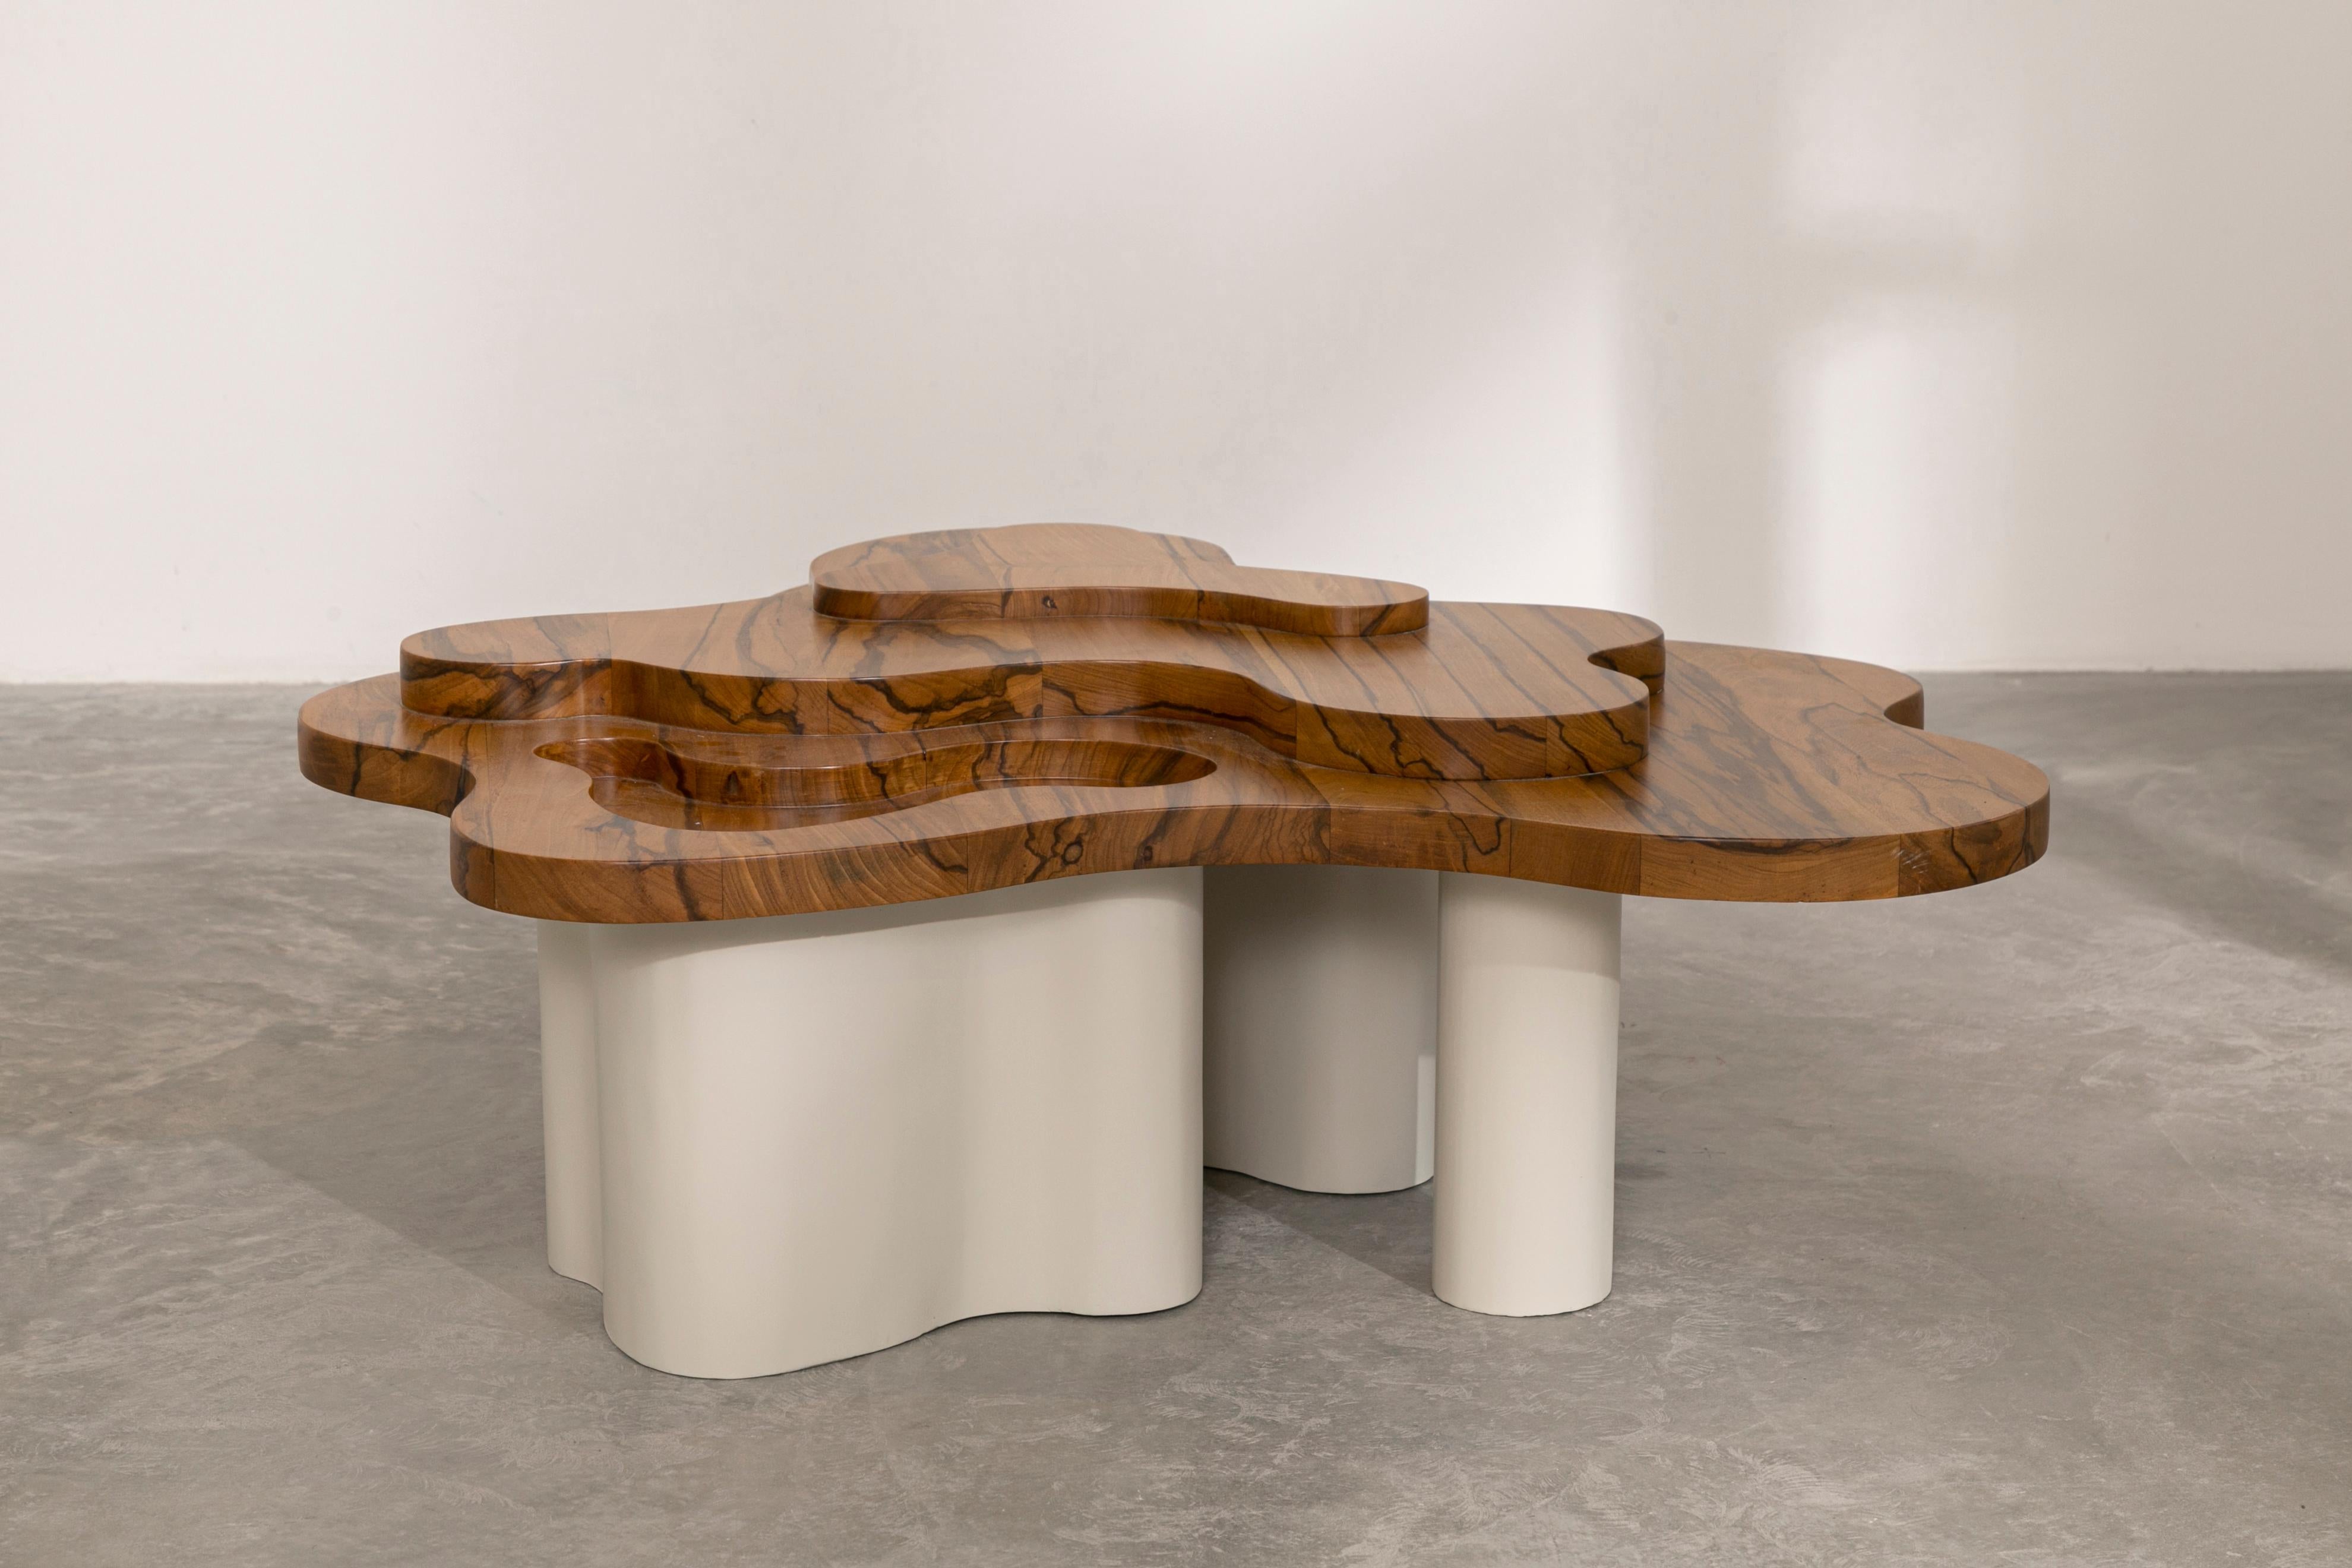 Panamanian Herida Table - Tropical Depression, handmade Dragon wood and metal coffee table For Sale